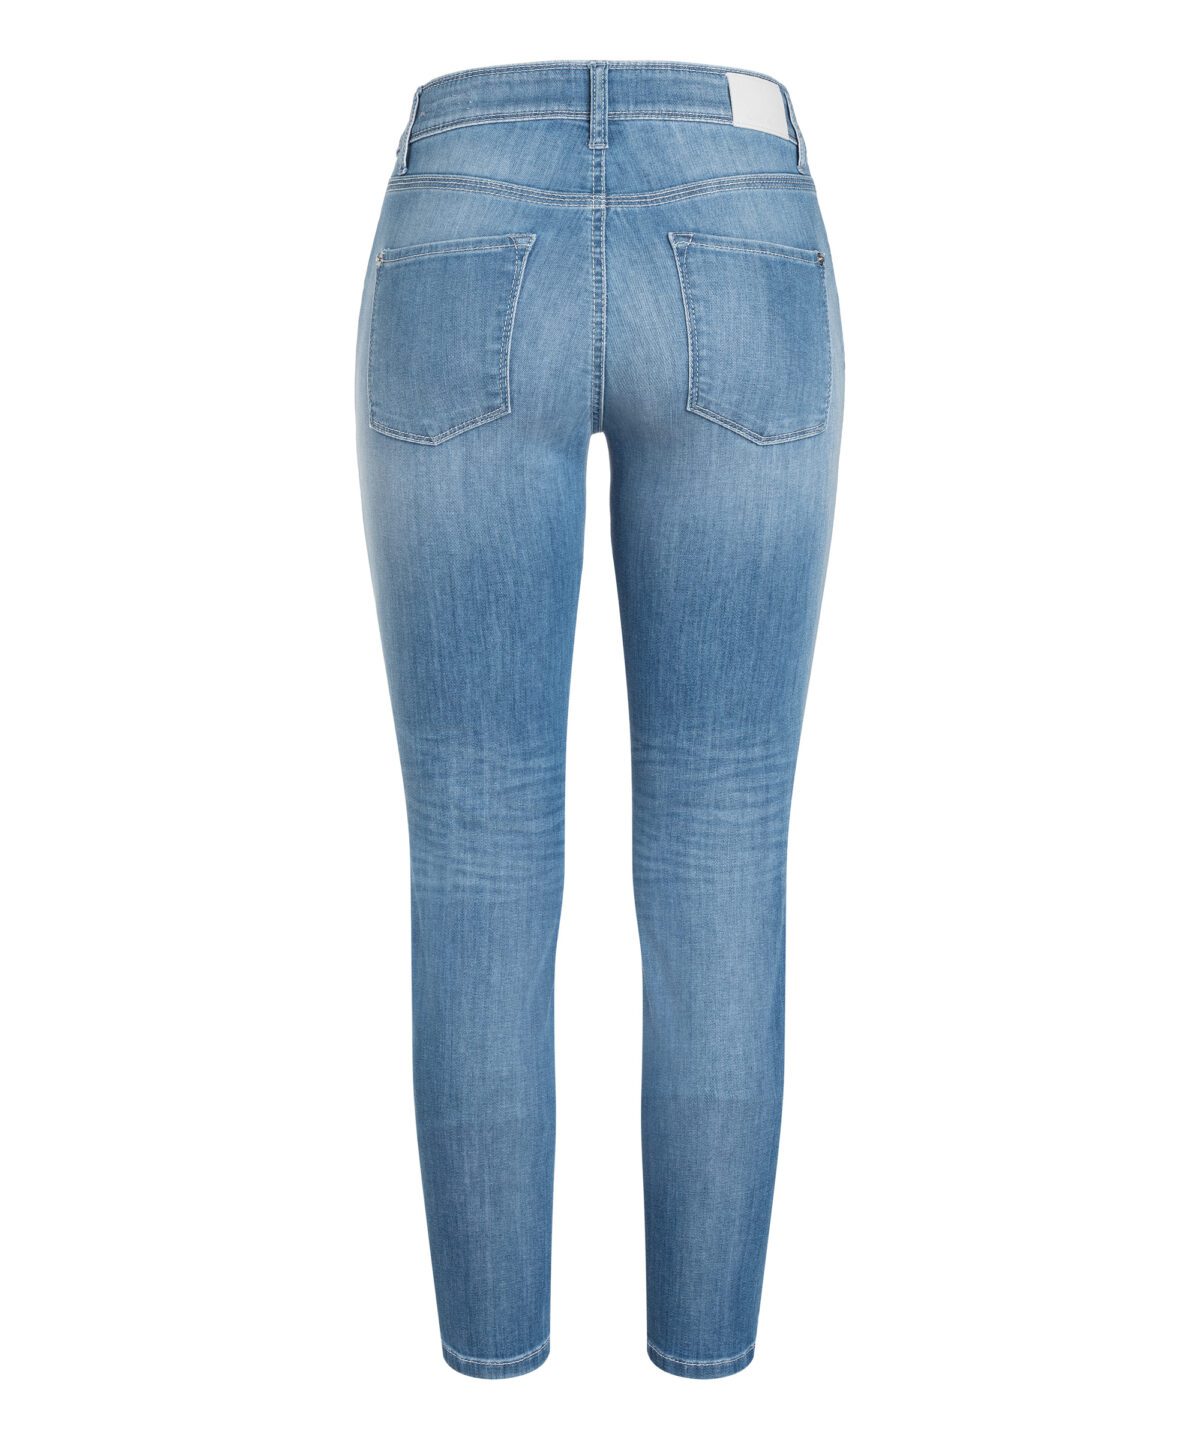 Cambio Jeans Piper short 1